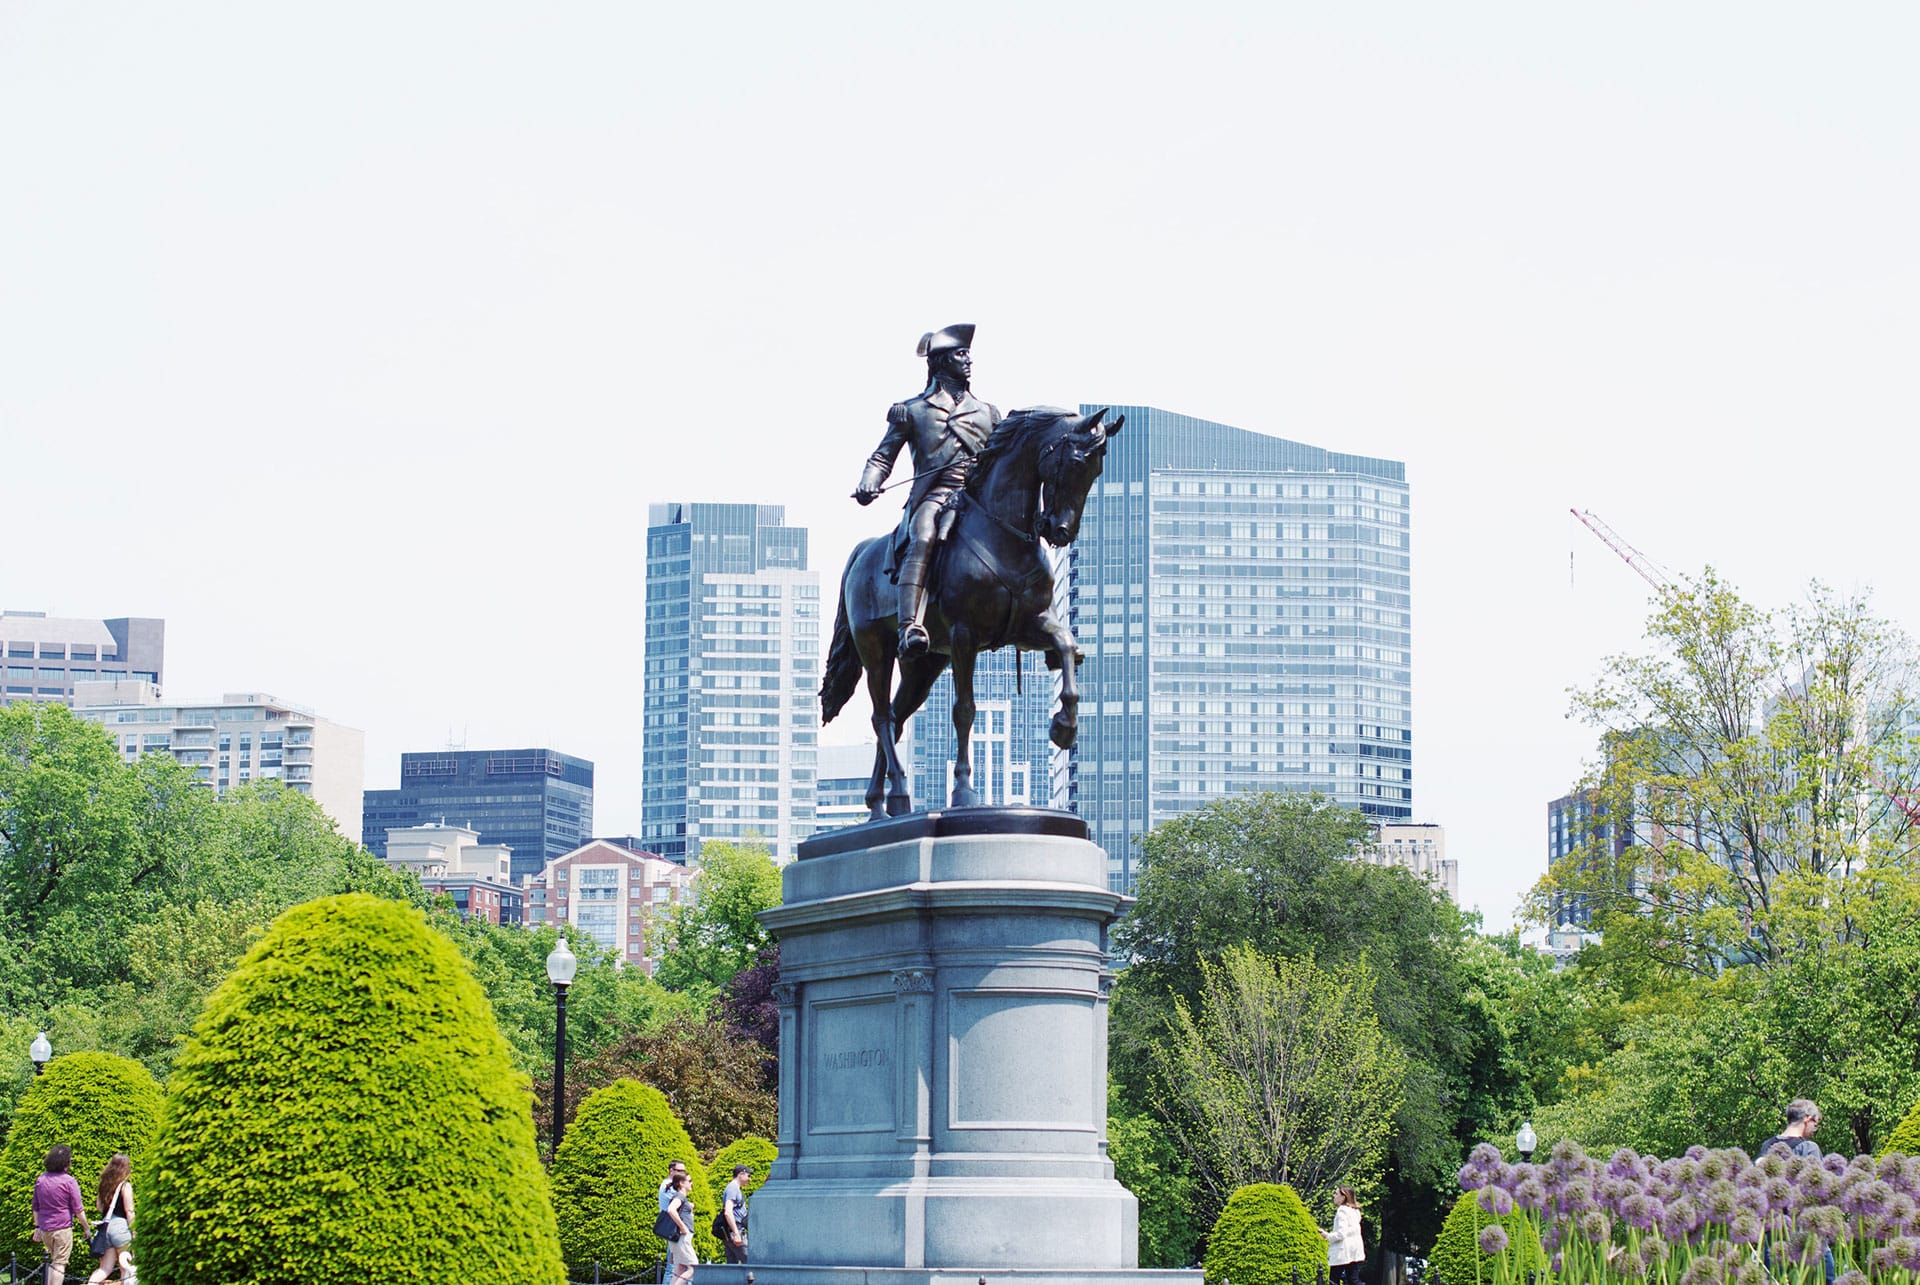 Statue monument in Boston, Massachusetts